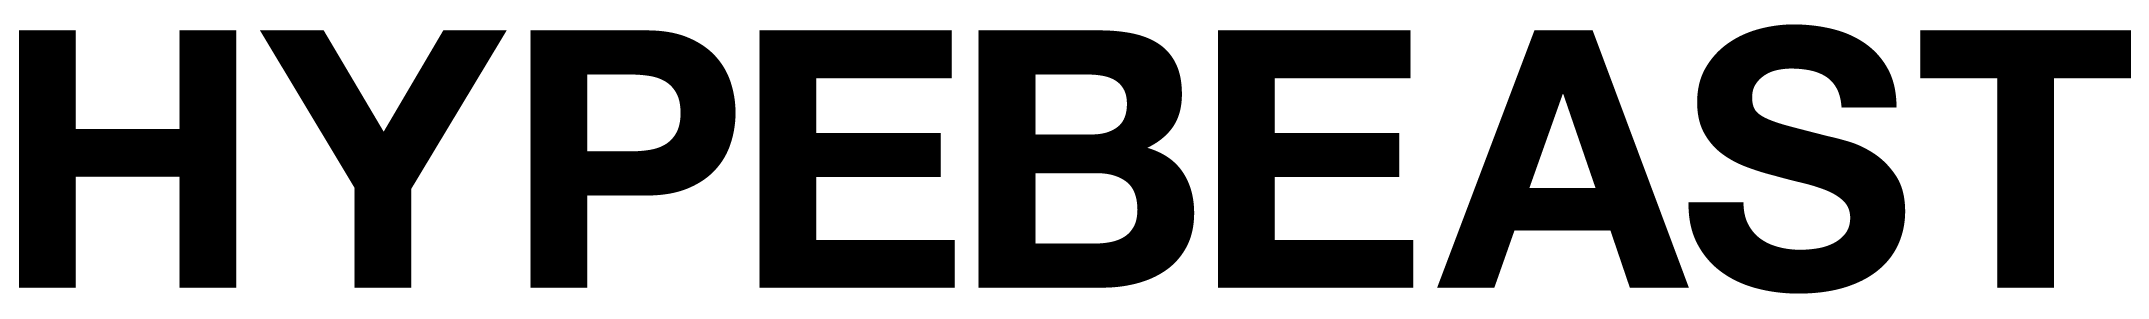 HYPEBEAST-Logo-2